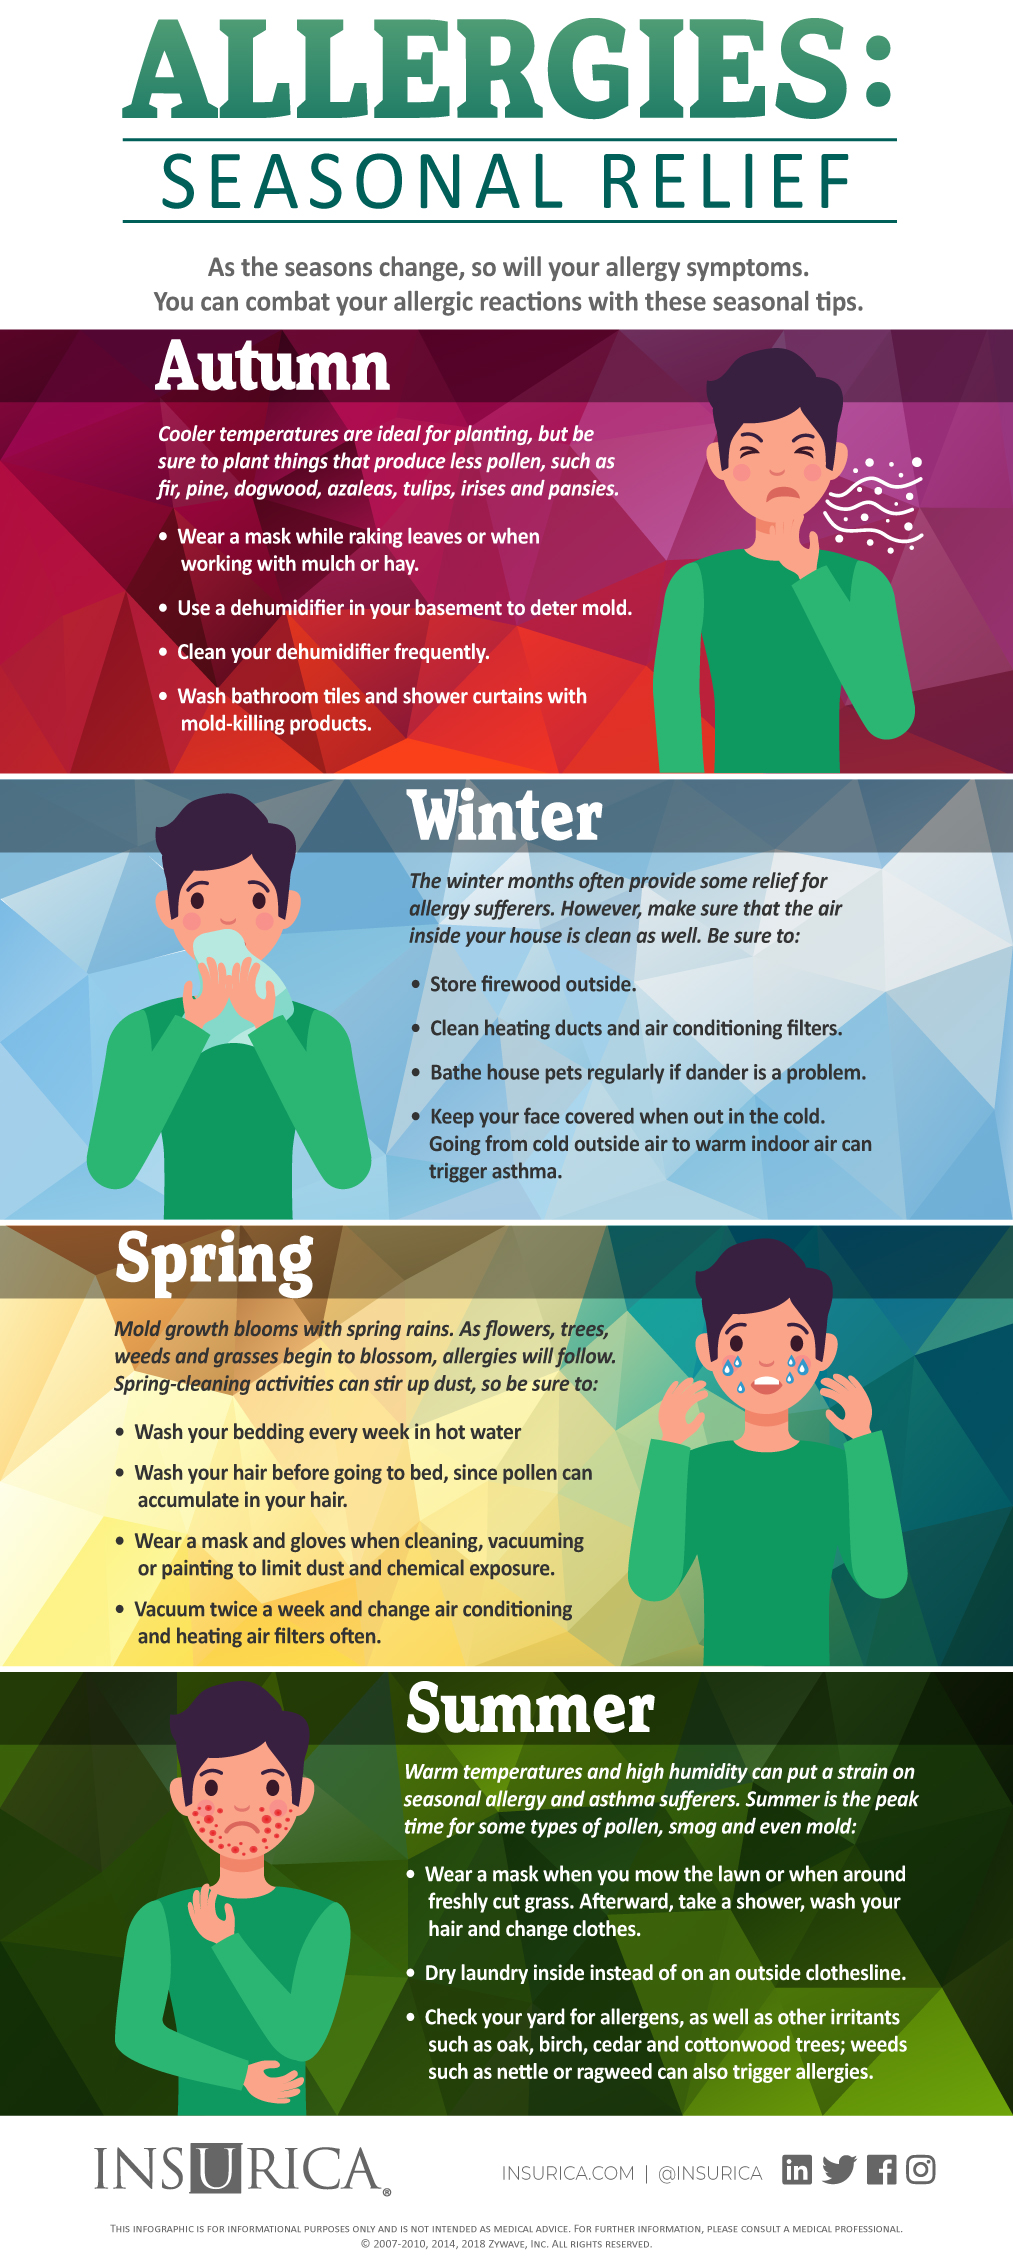 Seasonal Allergies: Tips for Relief - INSURICA